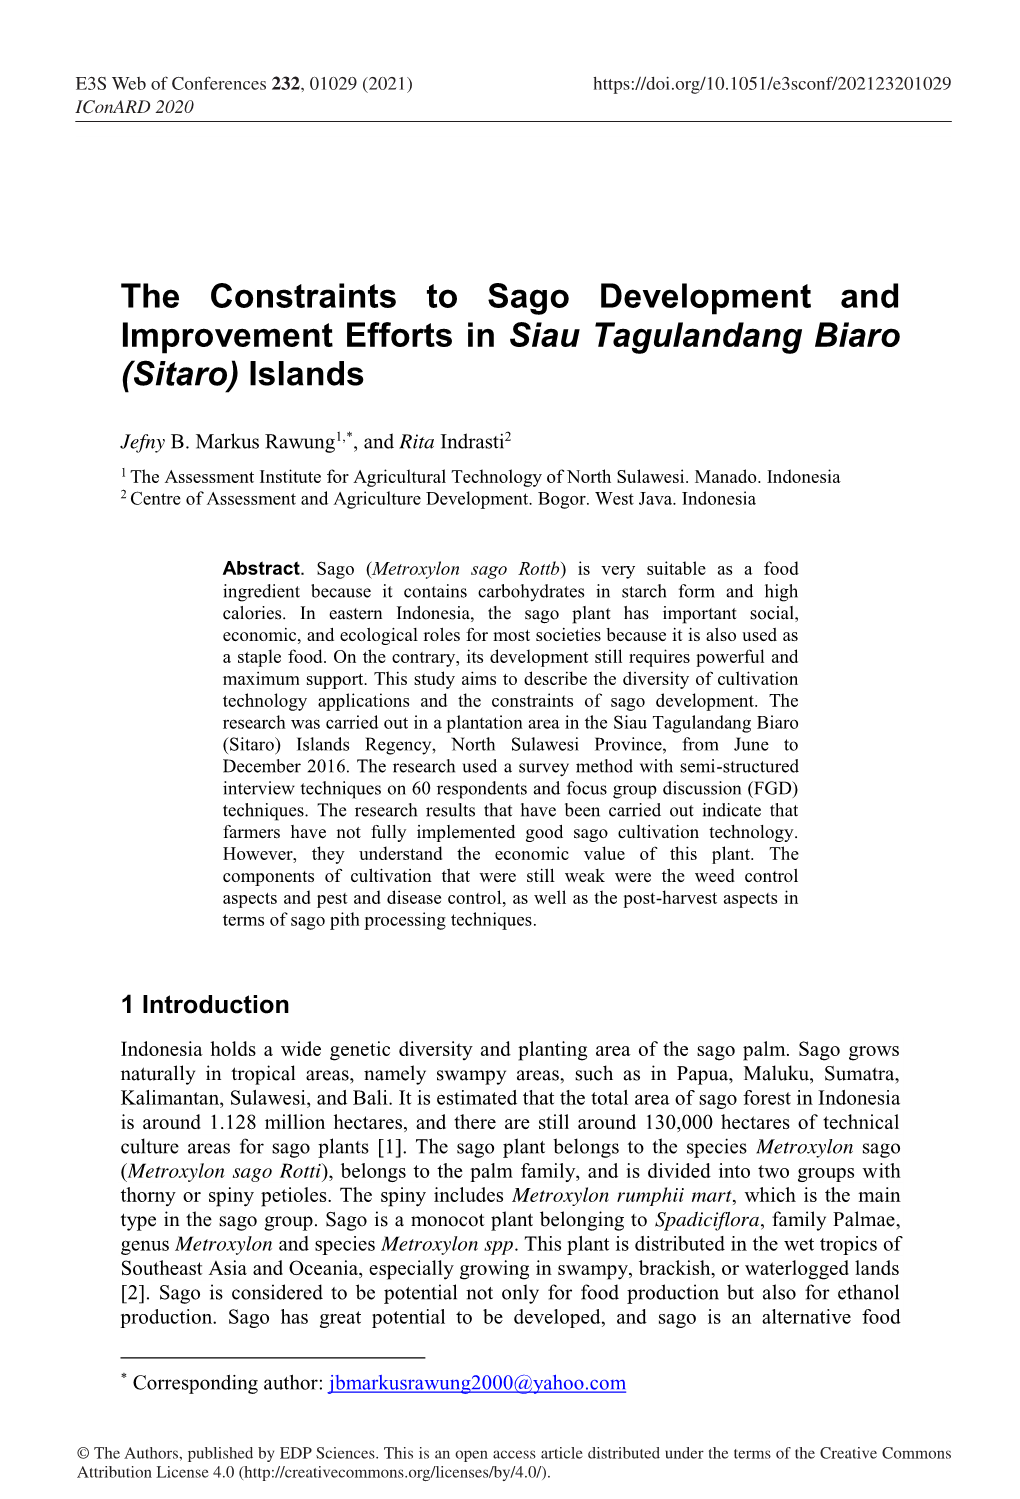 The Constraints to Sago Development and Improvement Efforts in Siau Tagulandang Biaro (Sitaro) Islands